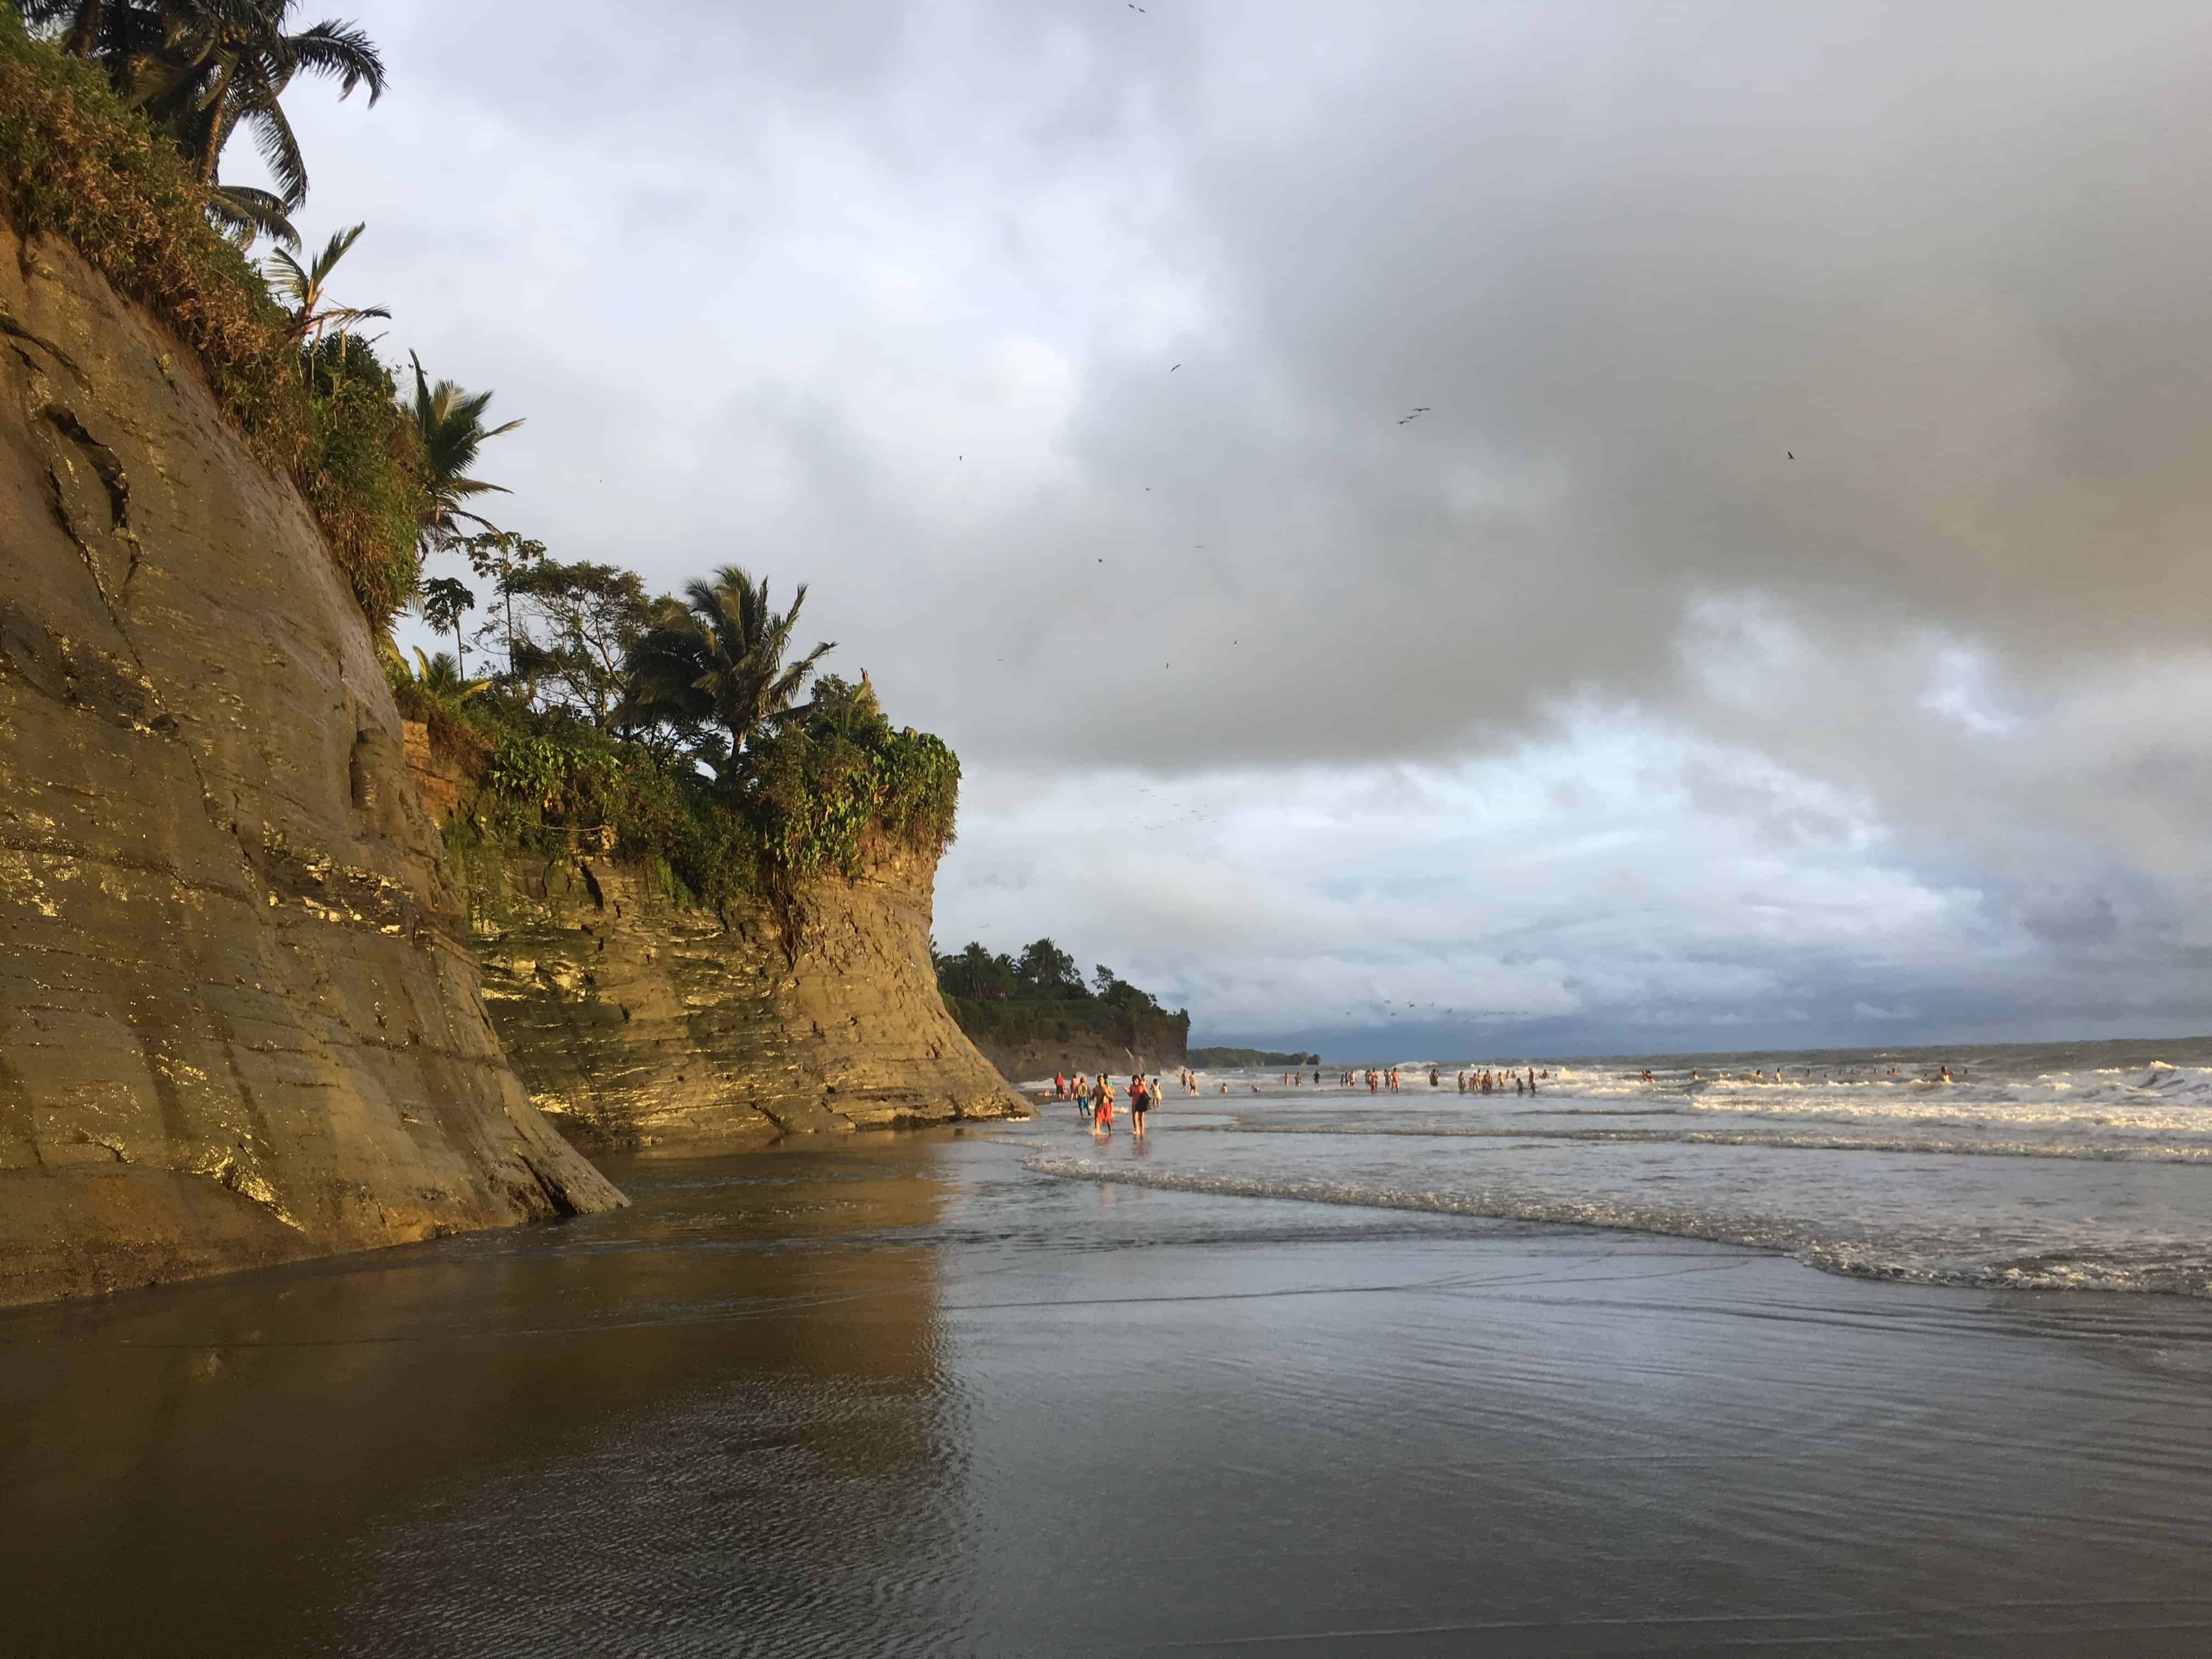 The beach in Ladrilleros, Valle del Cauca, Colombia